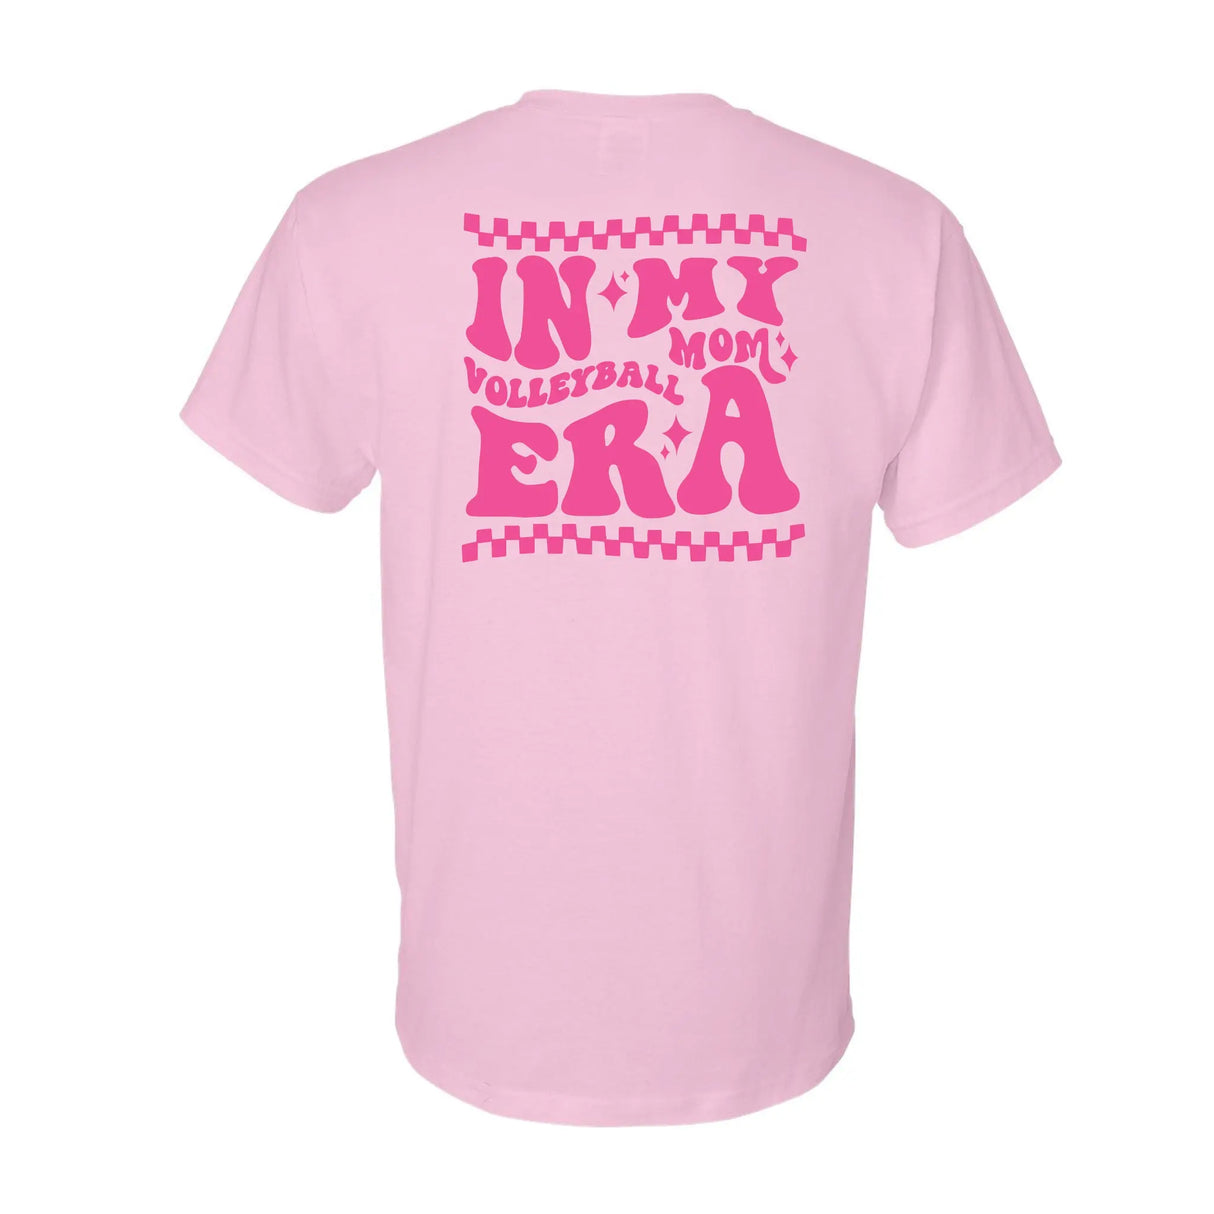 Volleyball Mom Era T-Shirt - Pink